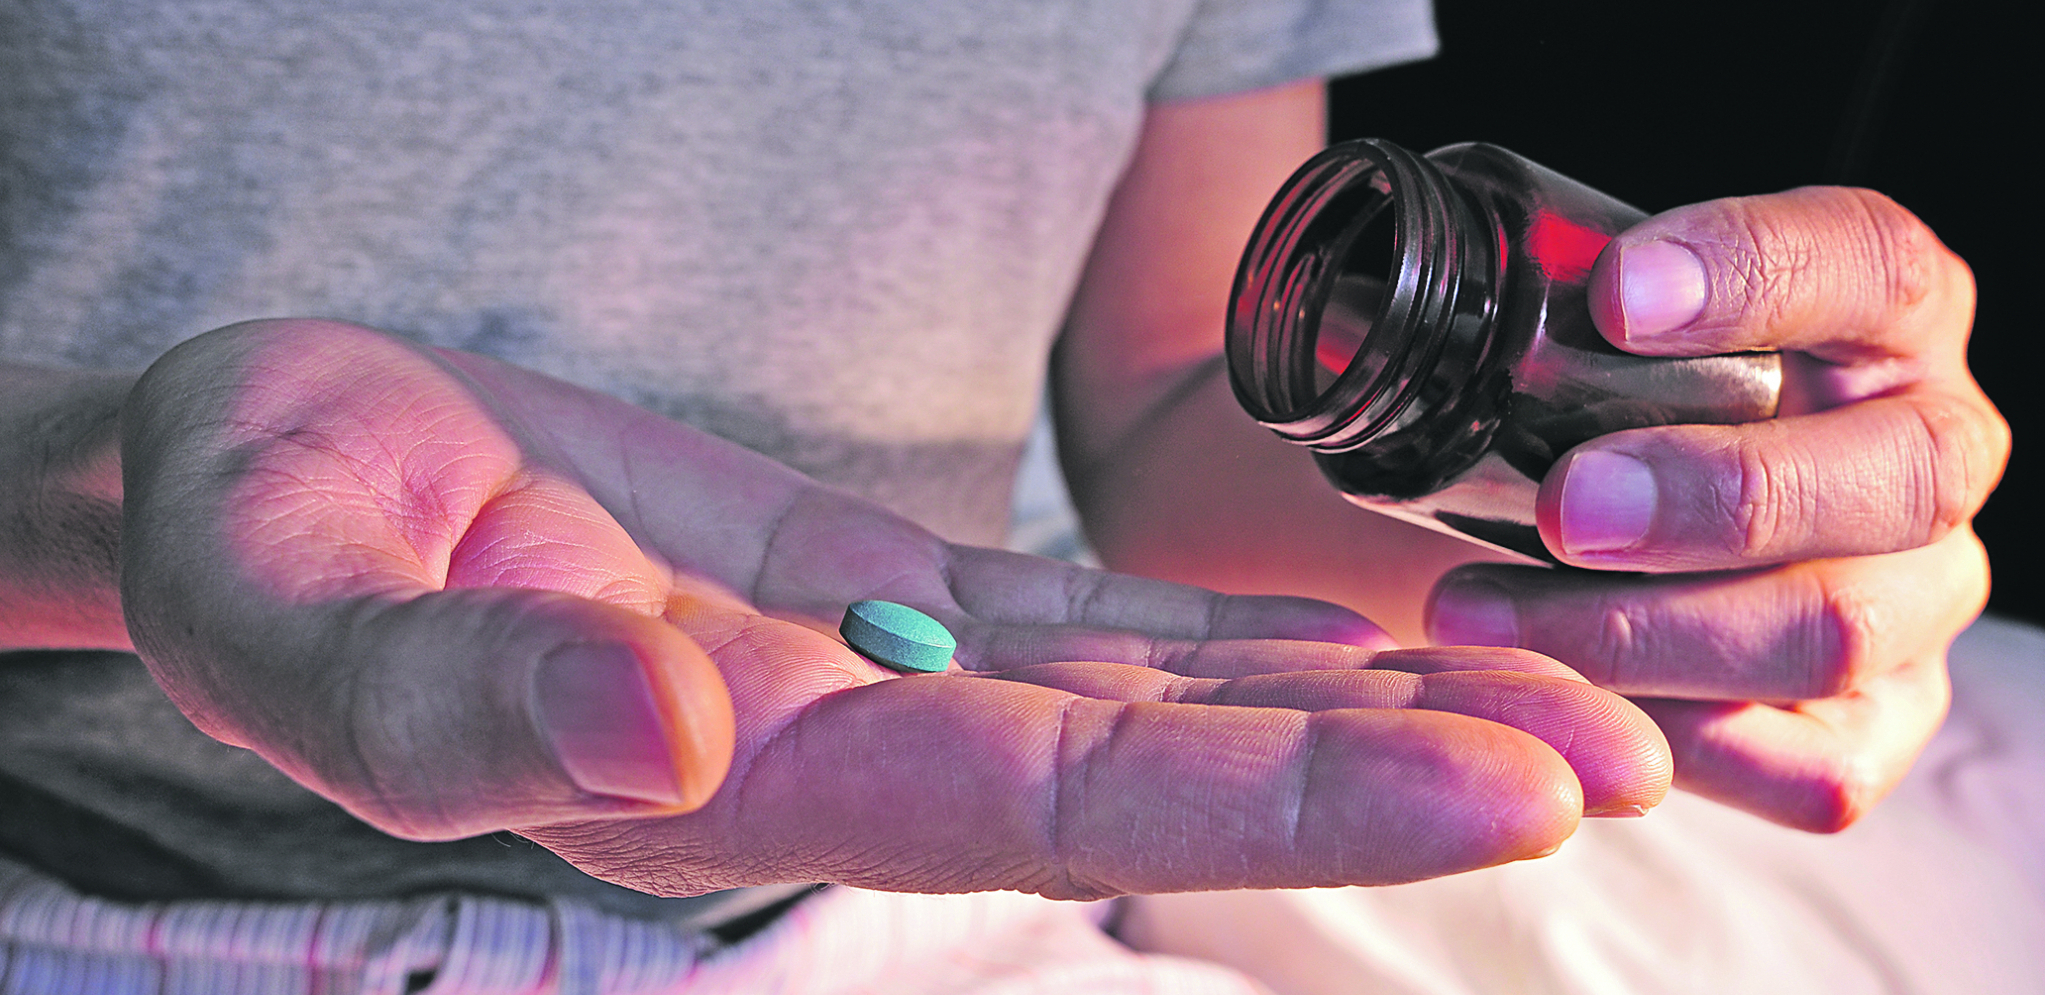 FARMACEUTI UPOZORAVAJU Lomljenje tableta može da bude štetno po zdravlje